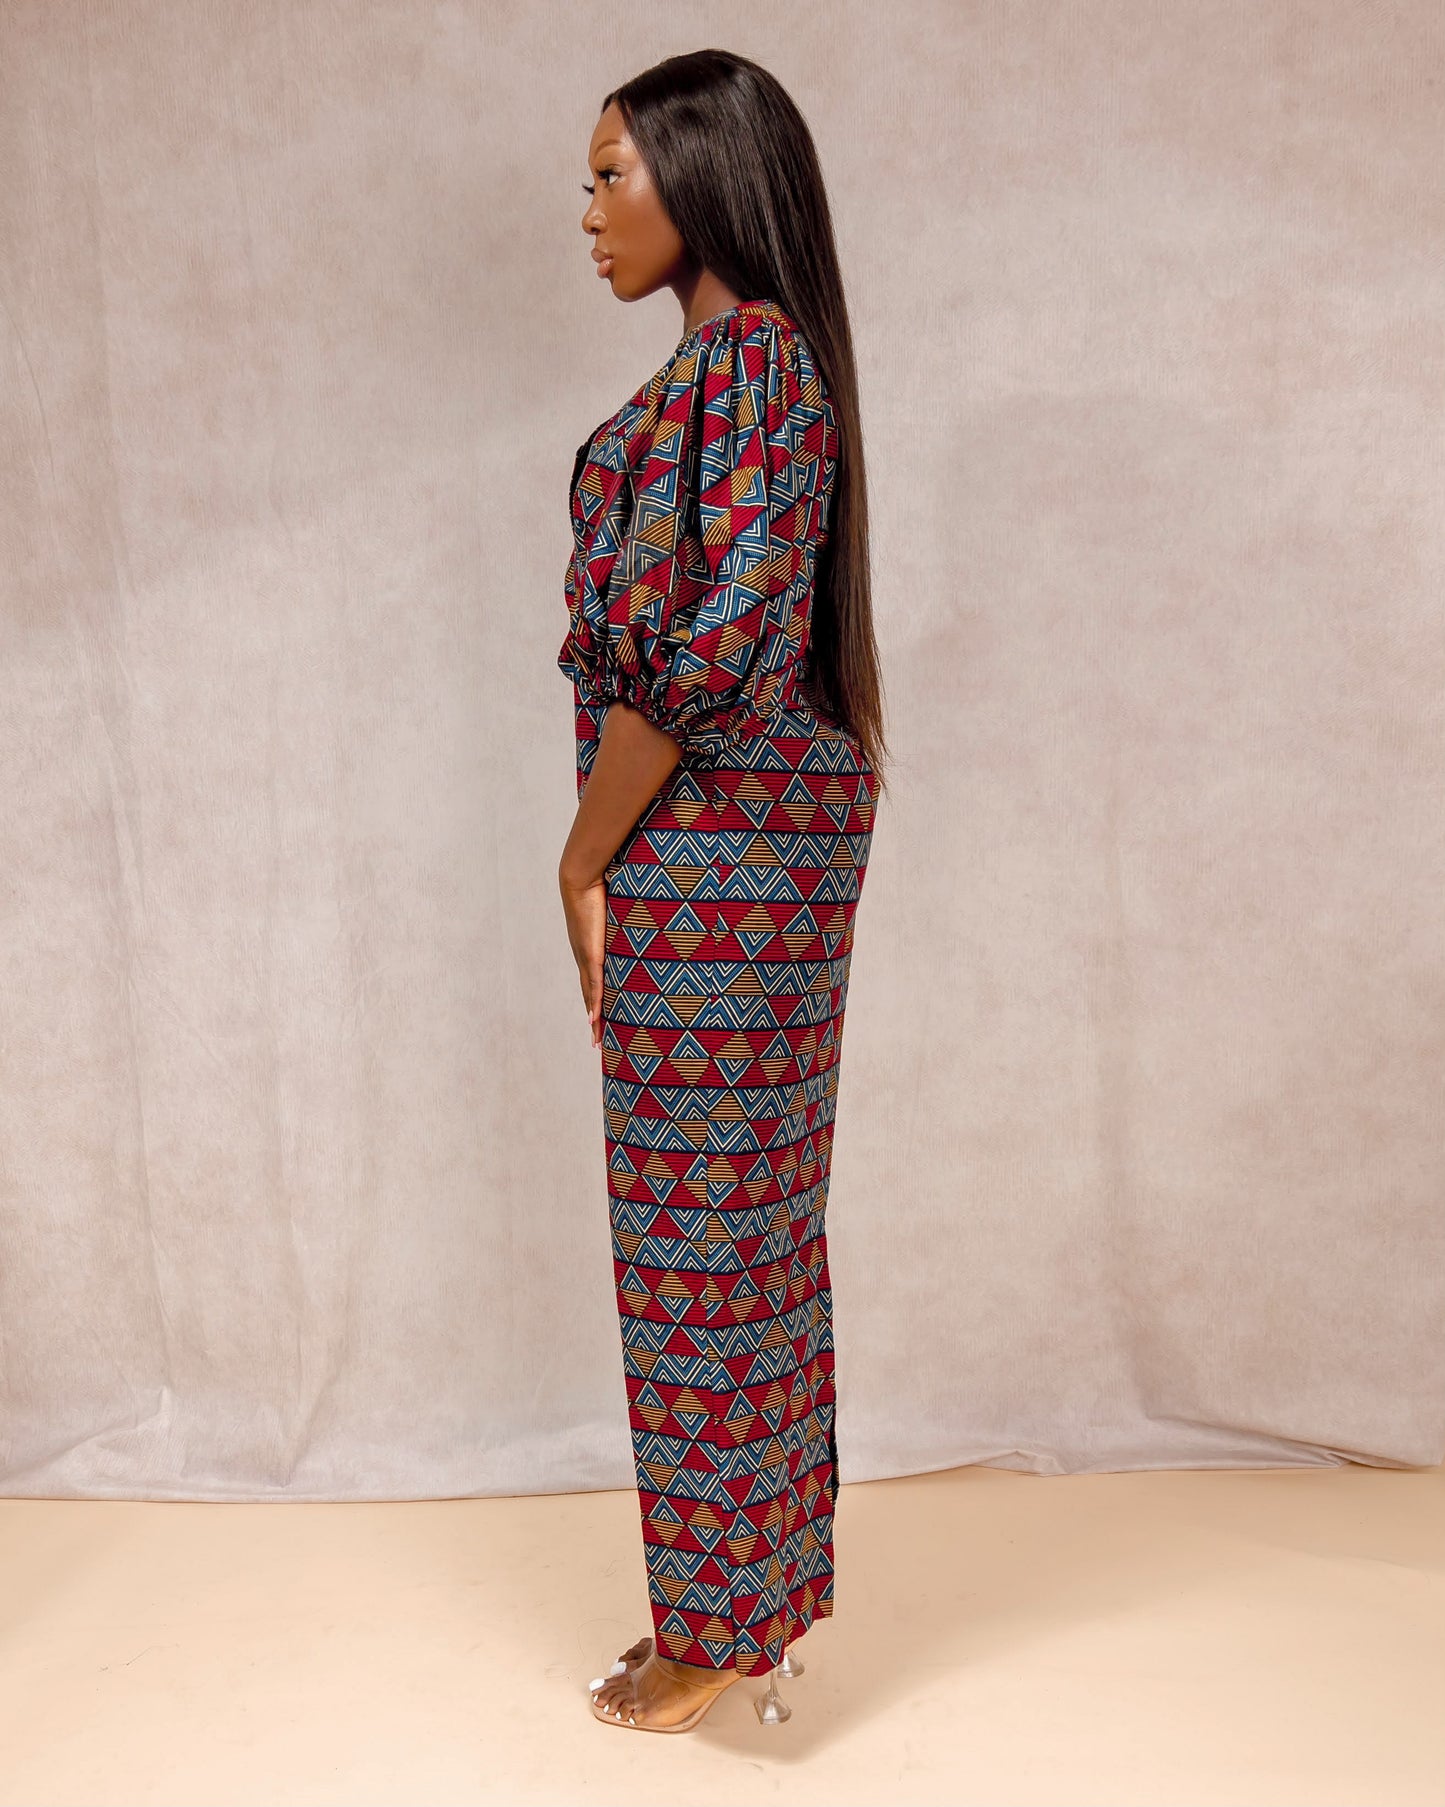 Chuma African print Dress